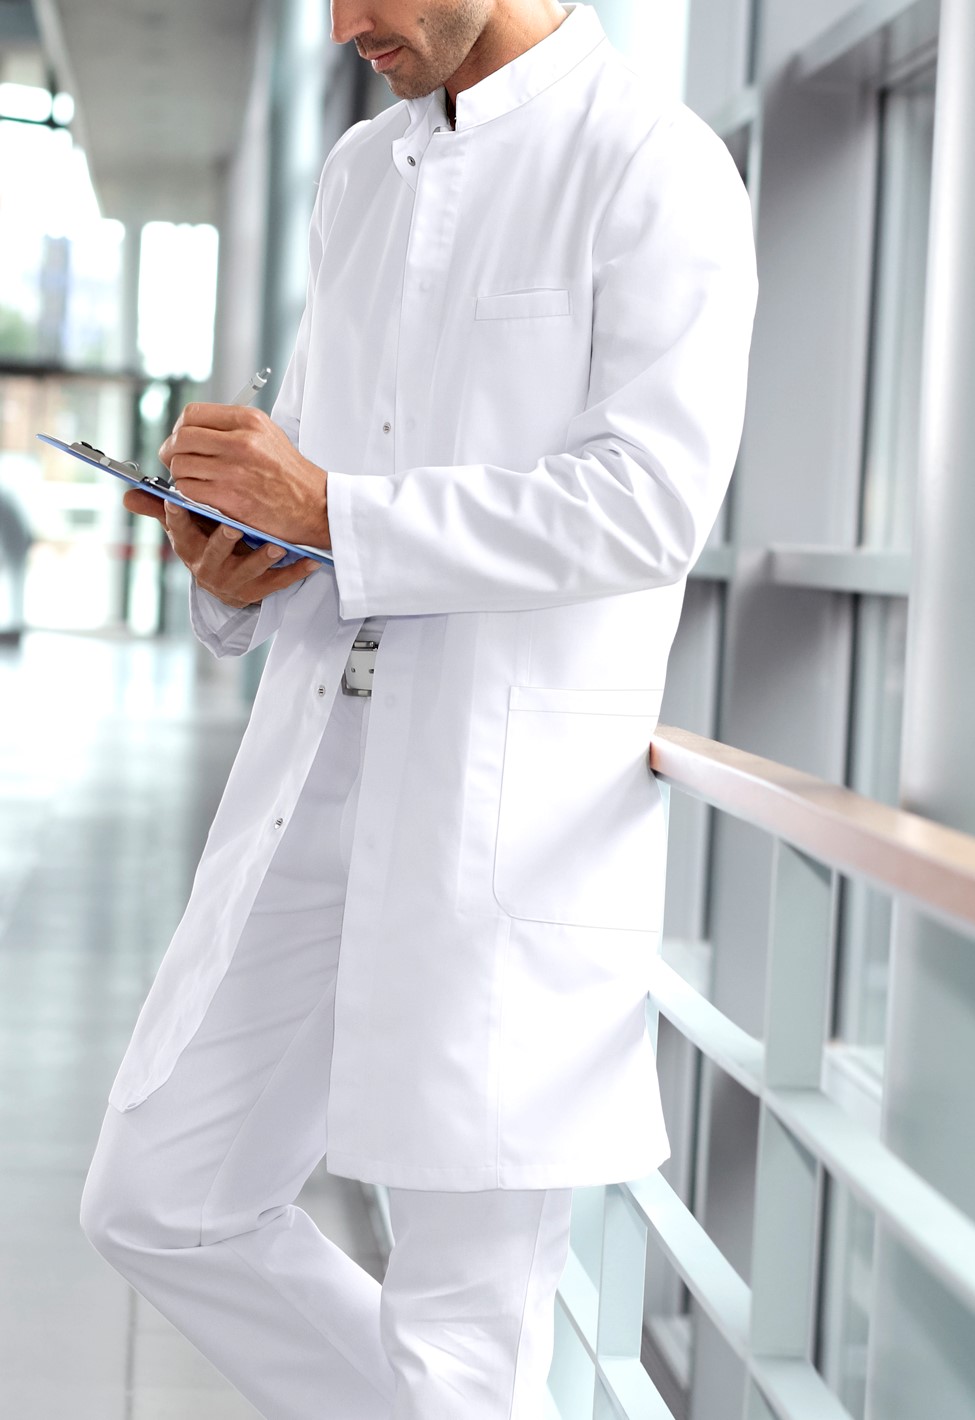 Camice Slim Medicale In Cotone Uomo Bianco Con Tasca Interna